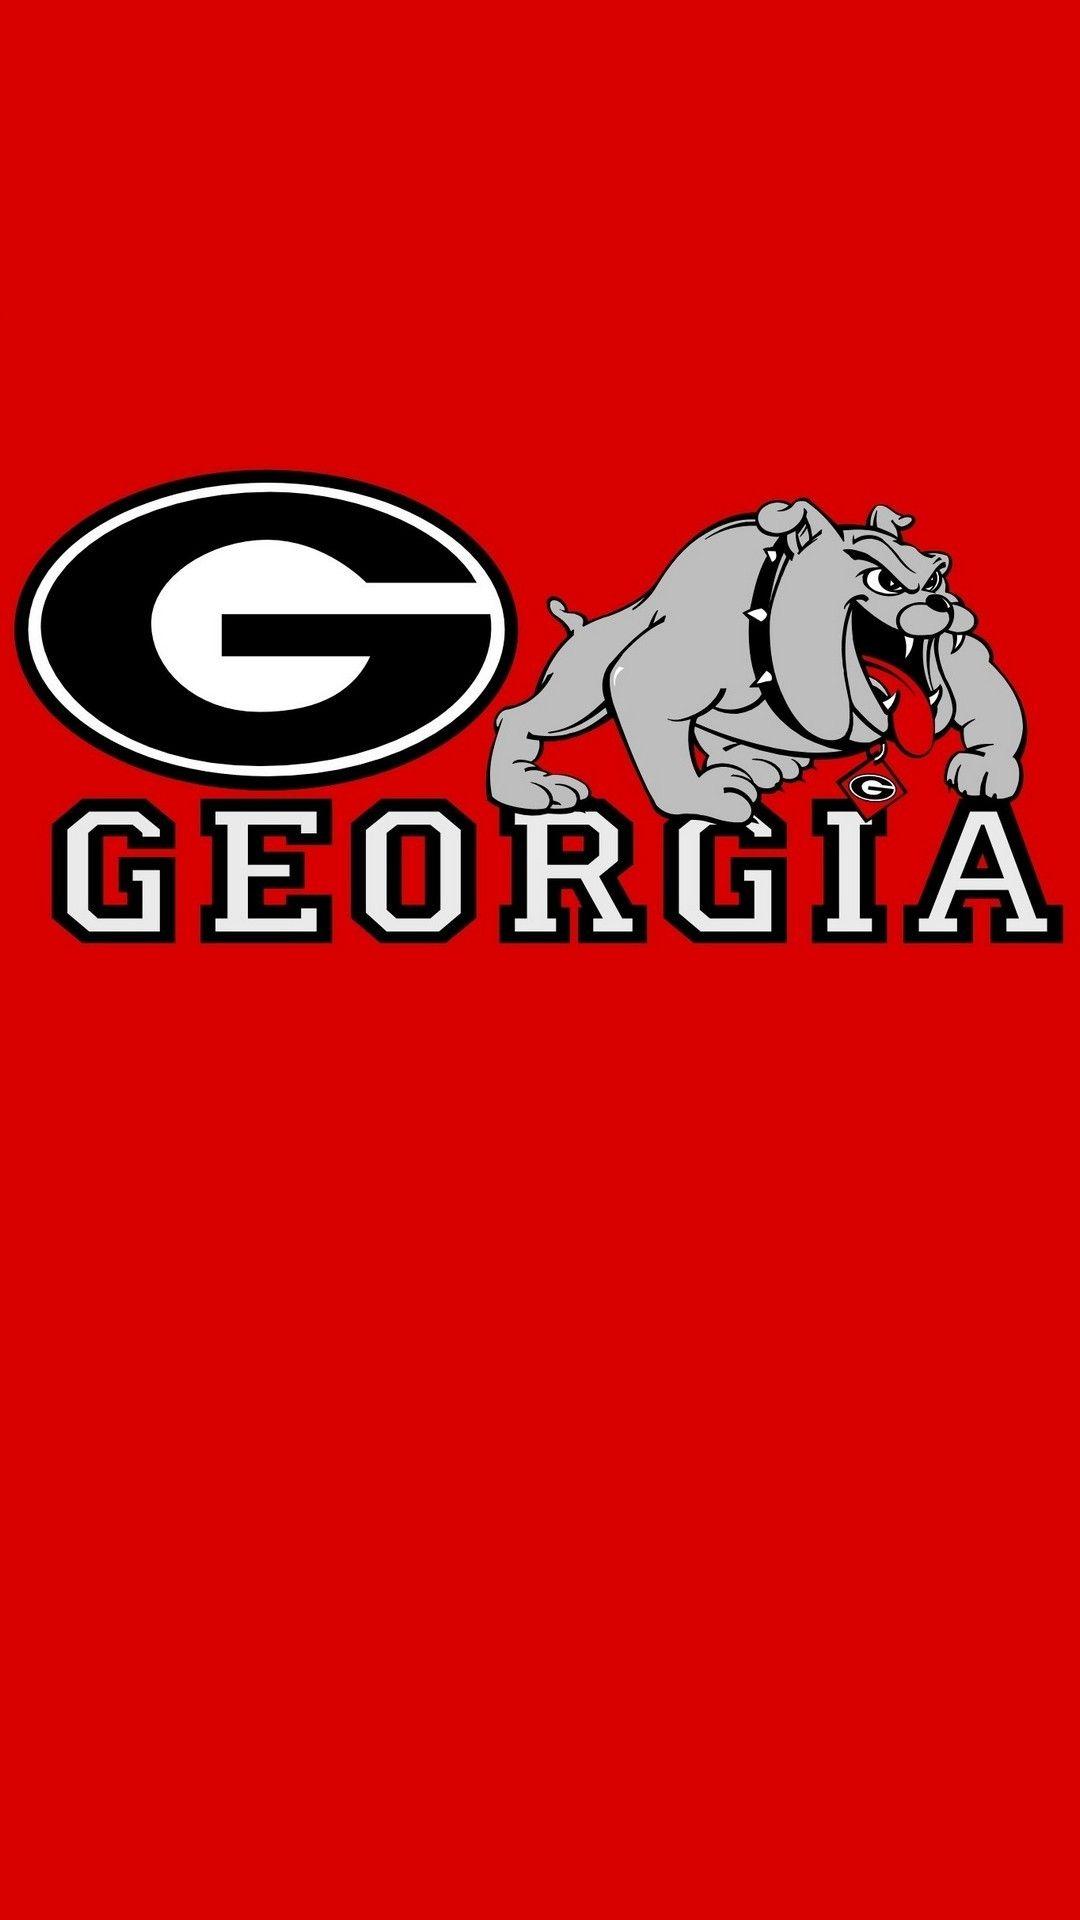 Georgia Bulldogs Wallpapers - Top Free